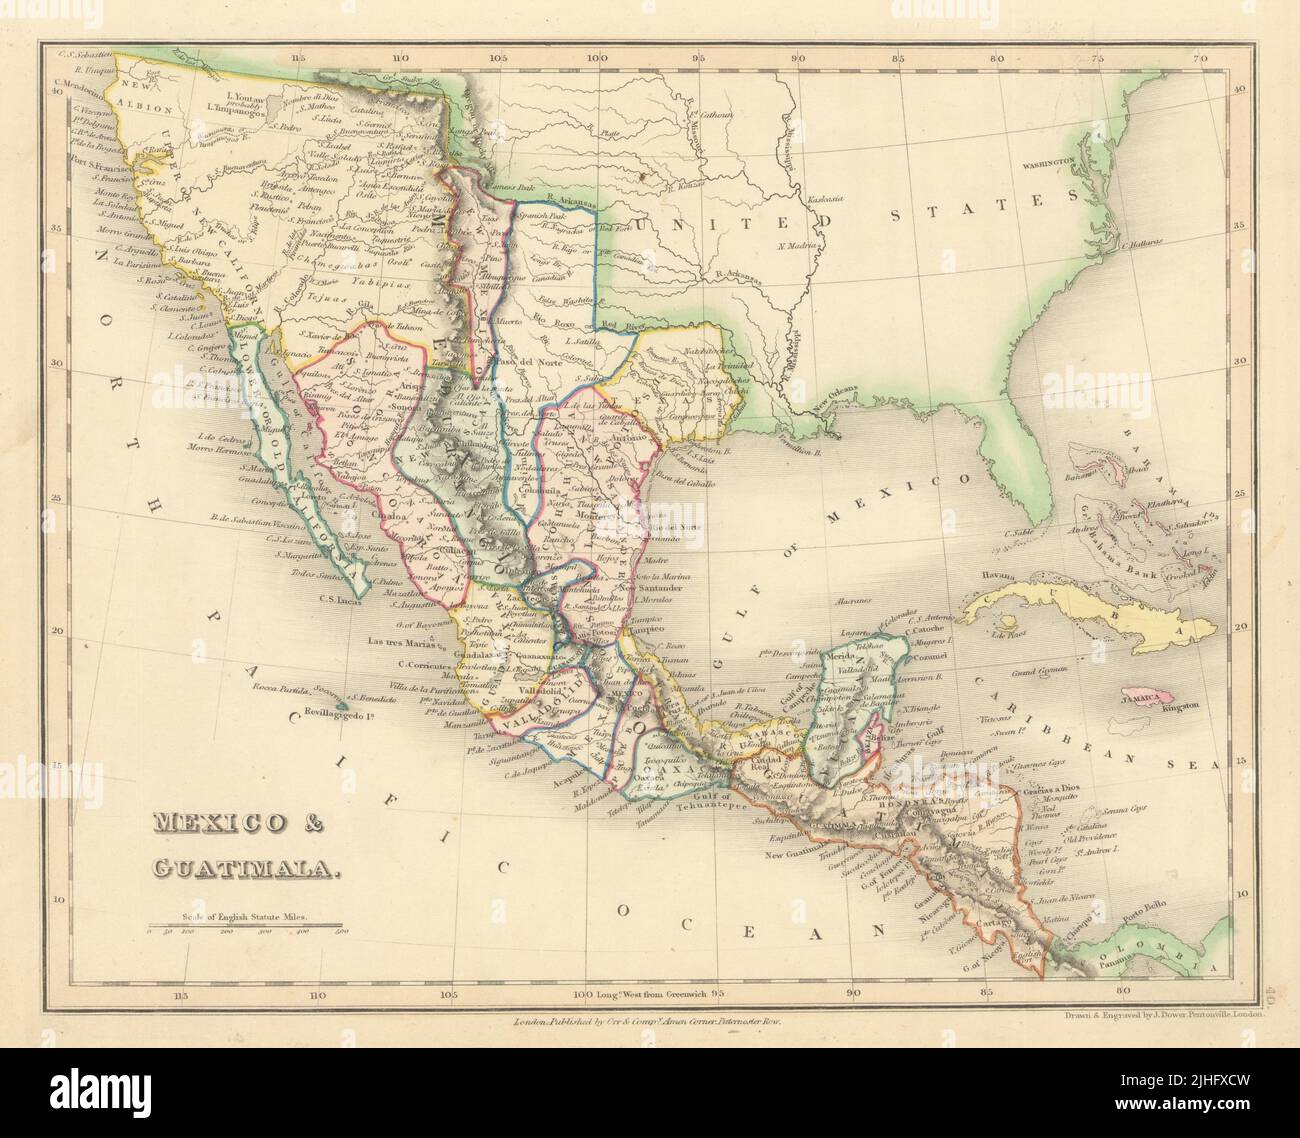 Mexico & Guatimala by John Dower. Mexico includes California & Texas 1845 map Stock Photo